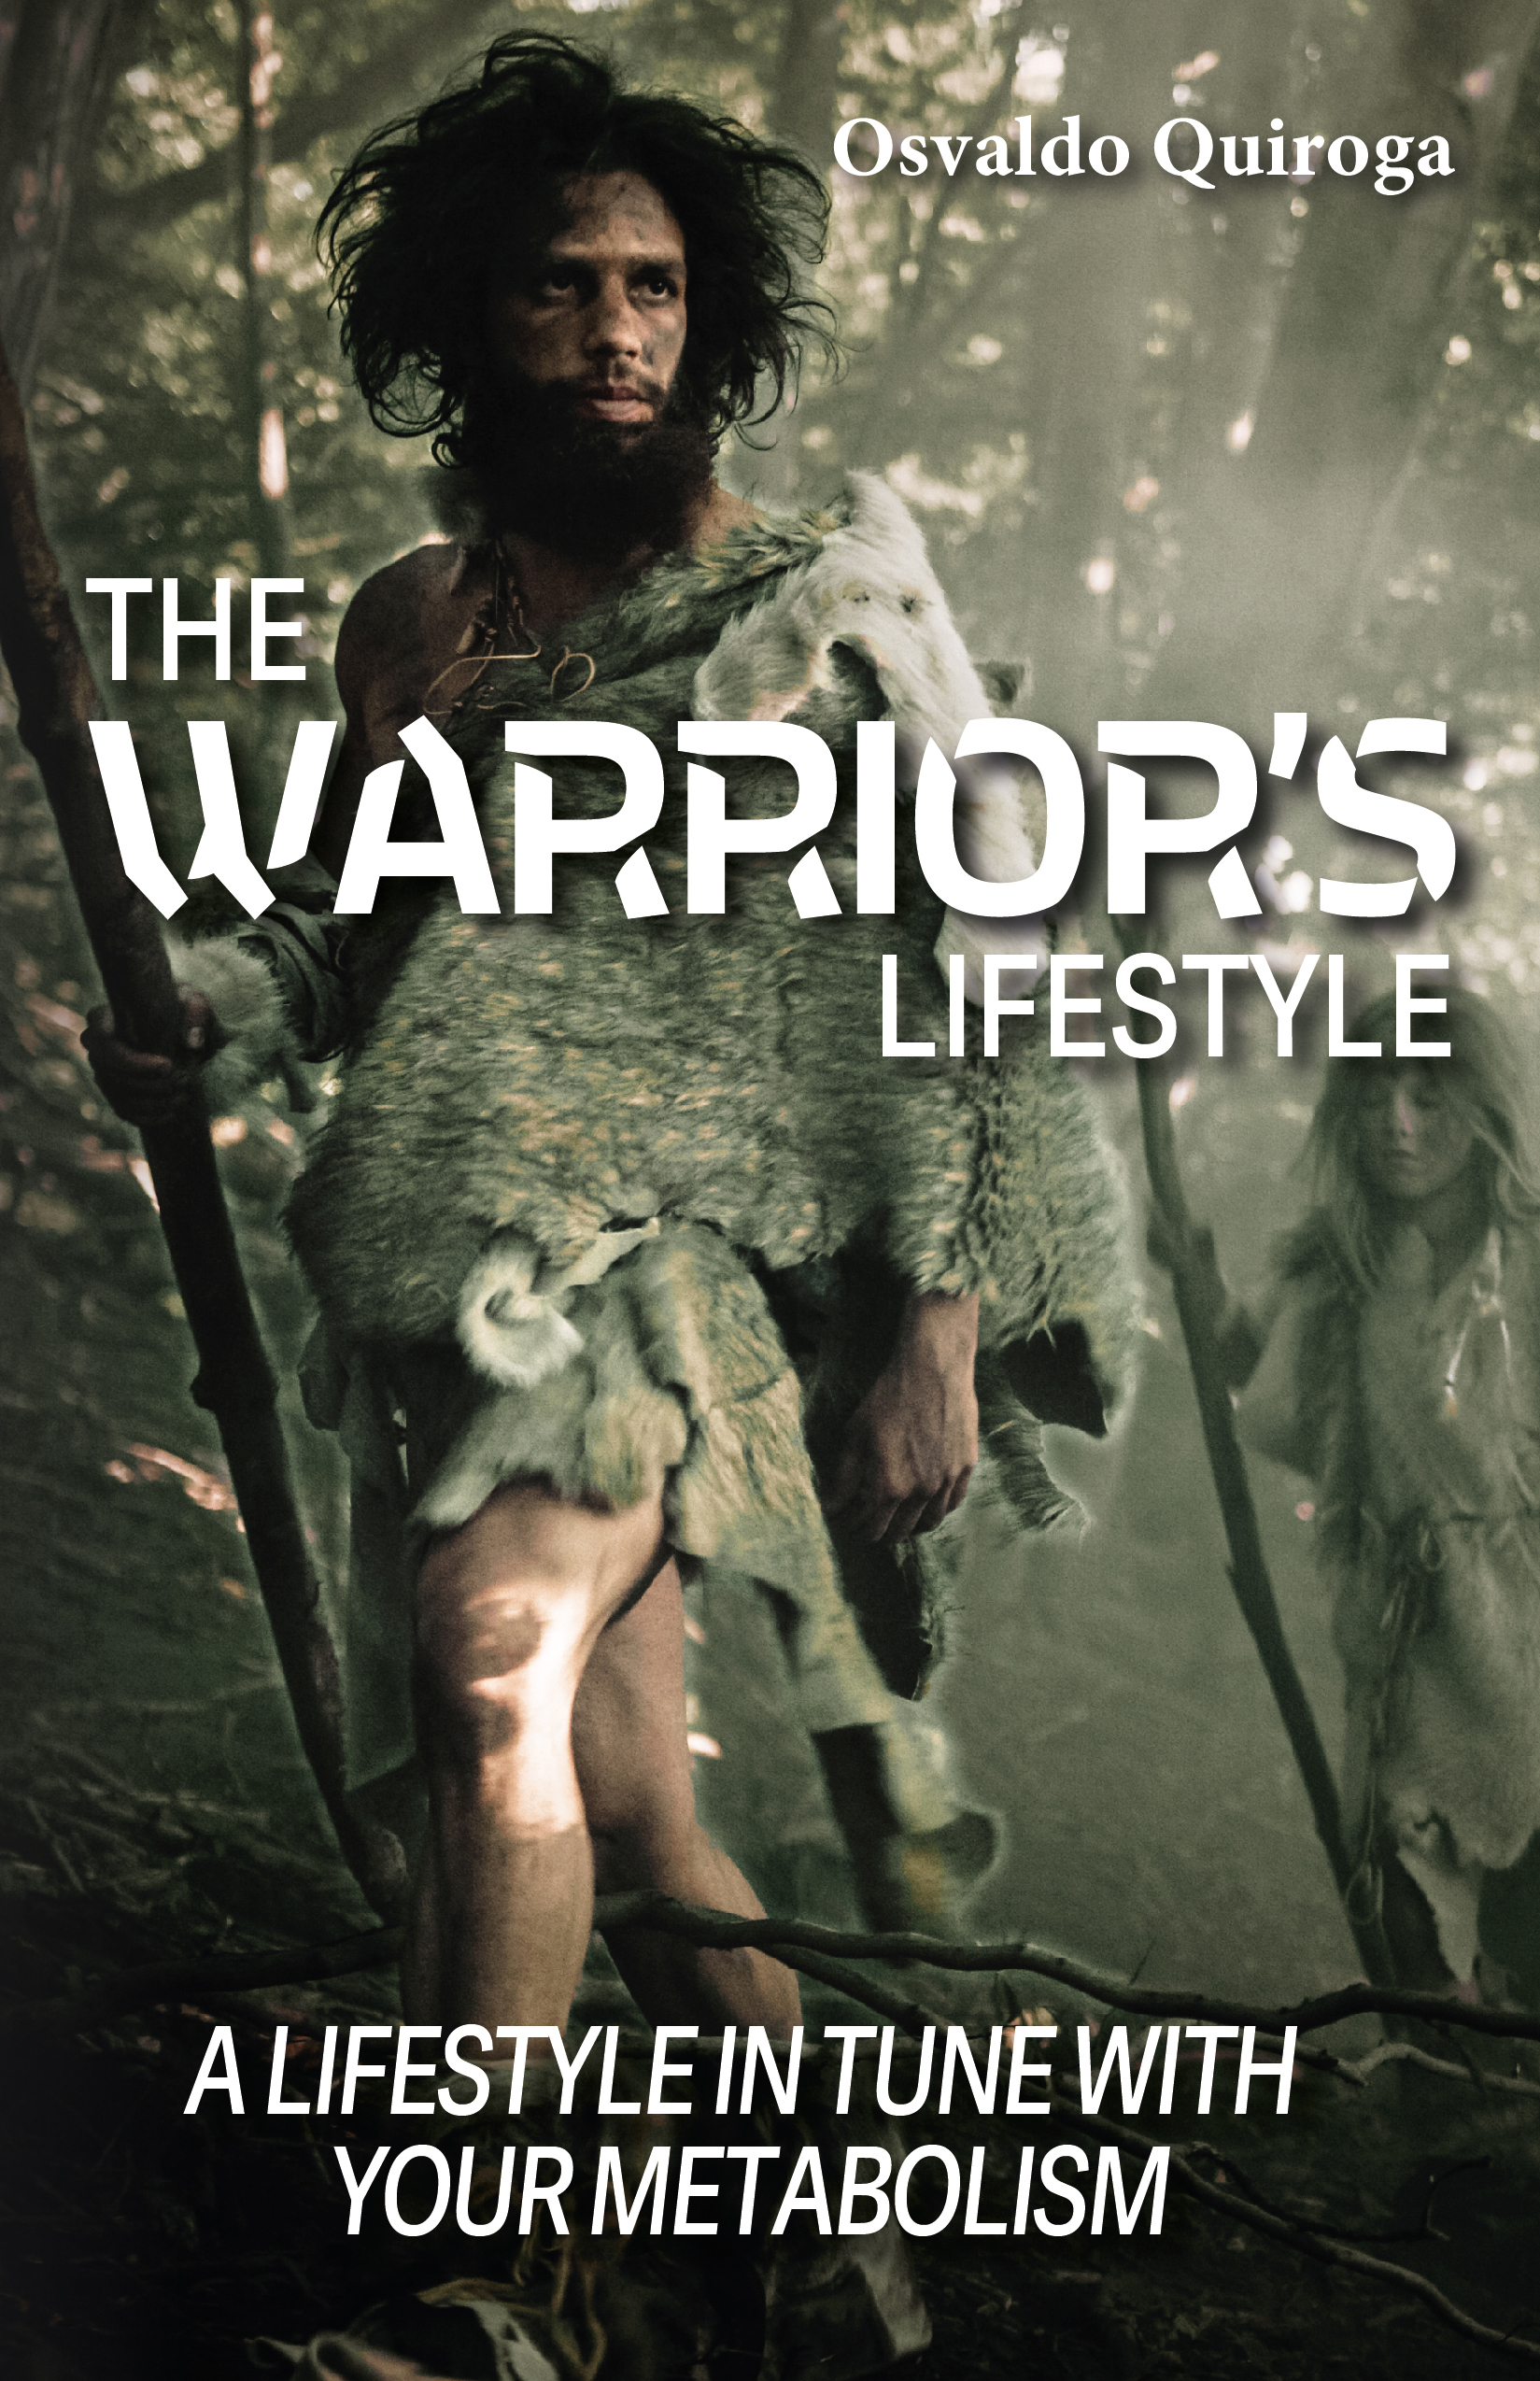 The Warrior's Lifestyle, de Osvaldo Quiroga